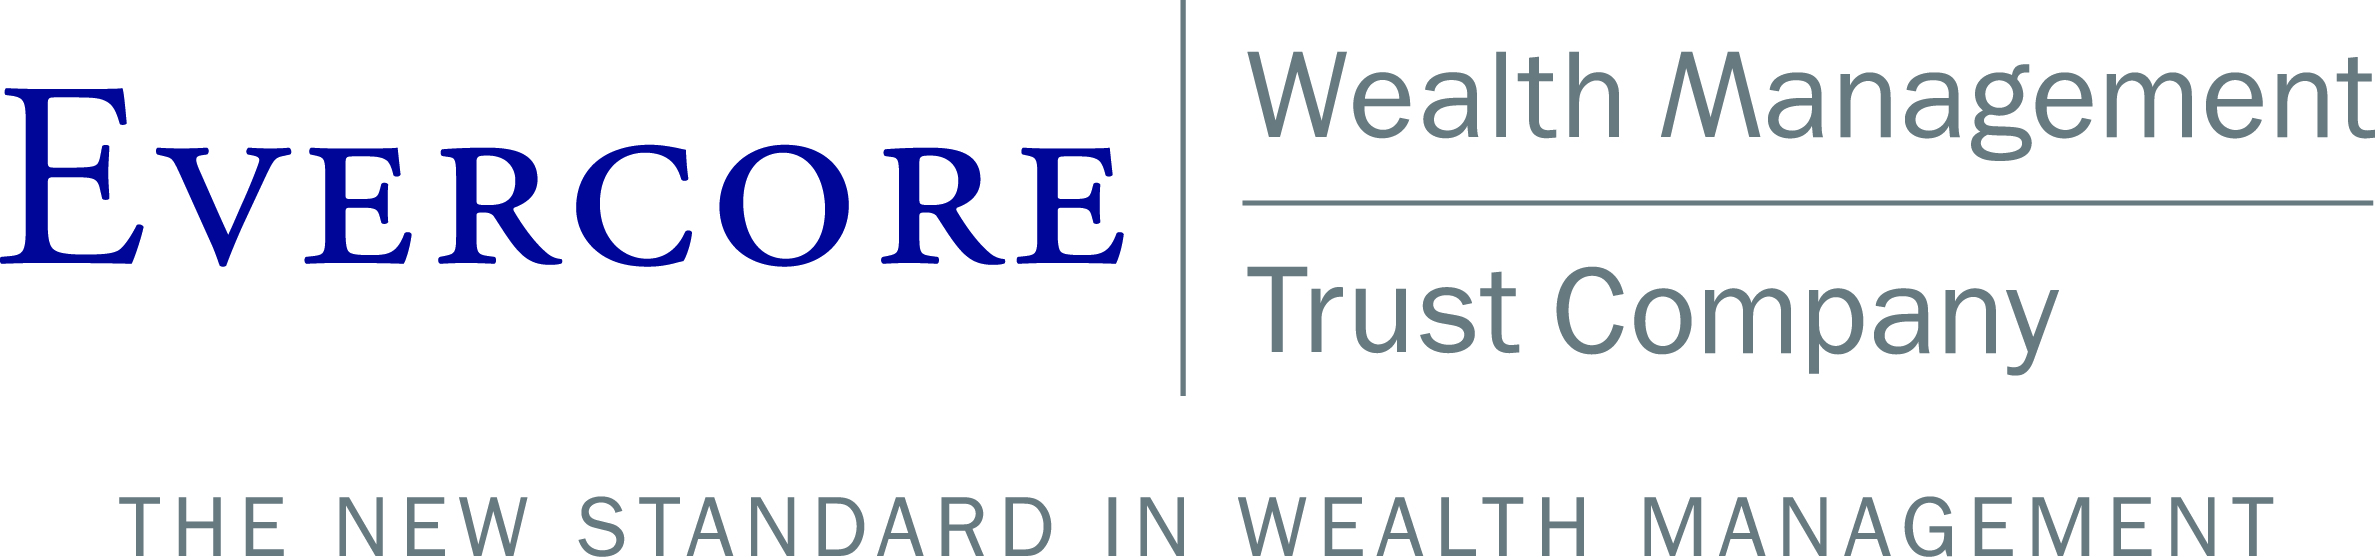 Evercore Wealth Management Trust Company - Logo